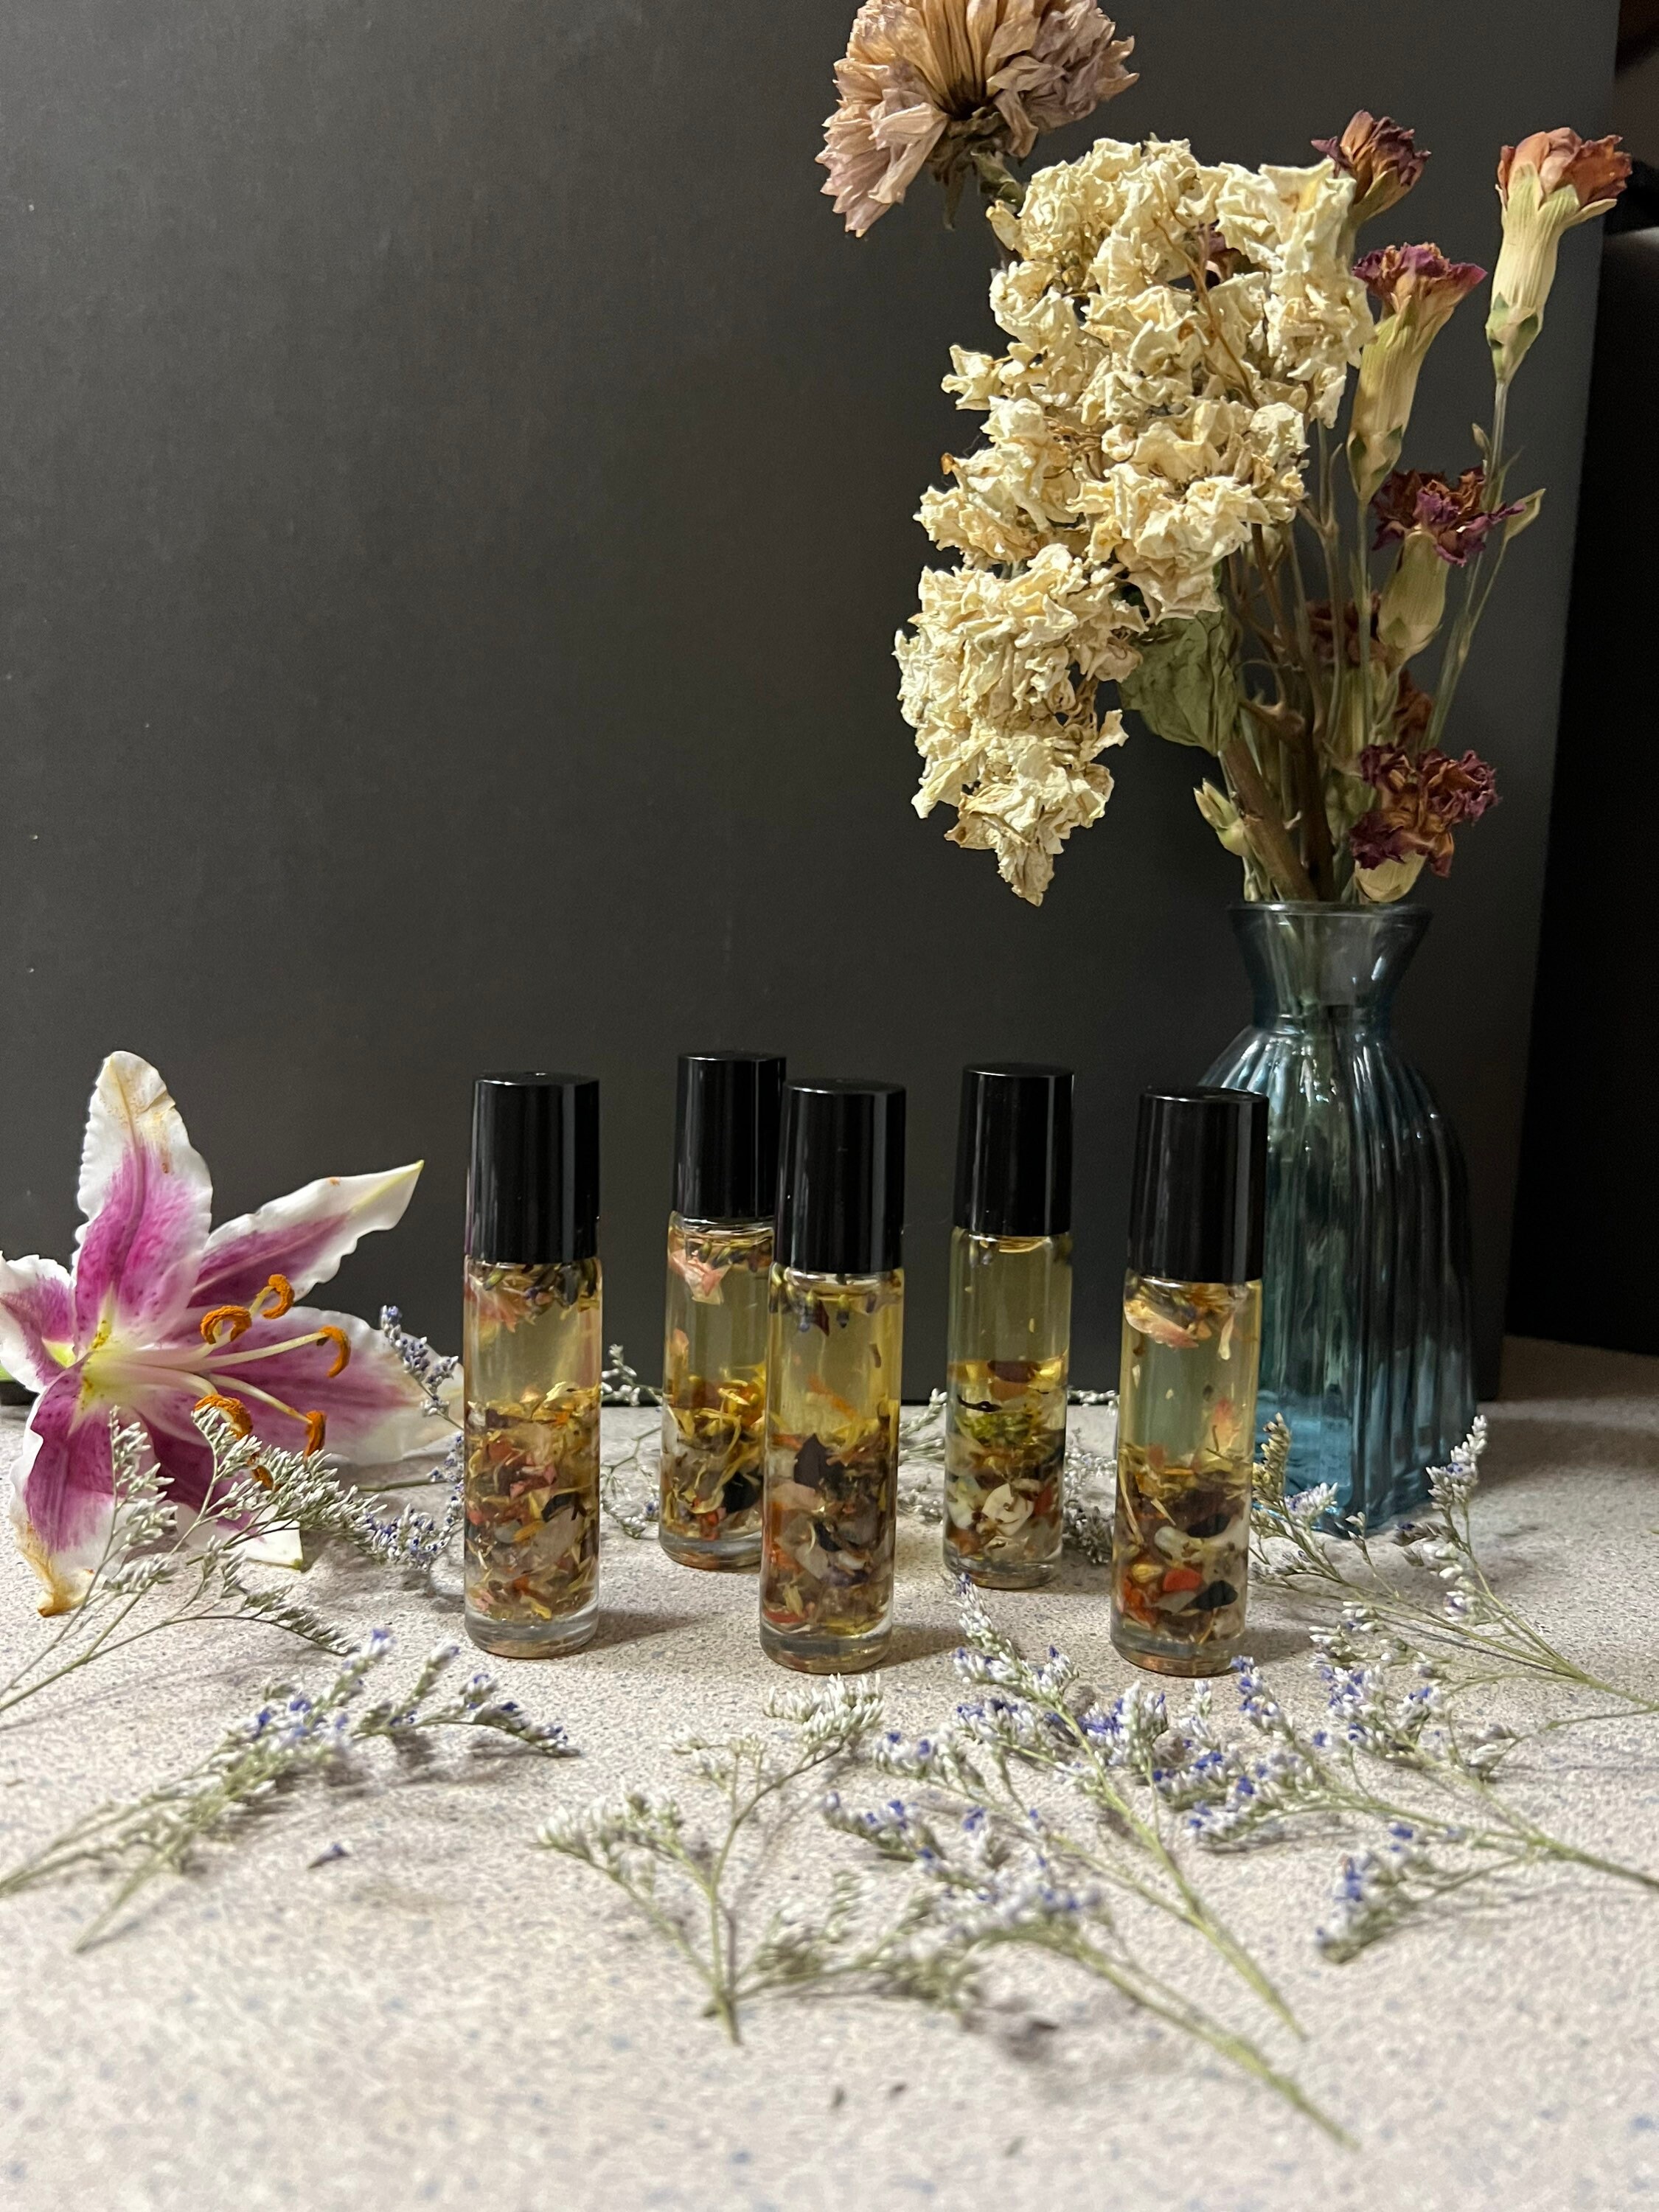 Crystal Healing Essential Oil Roller, Ritual Body Oil, Perfume Oil 